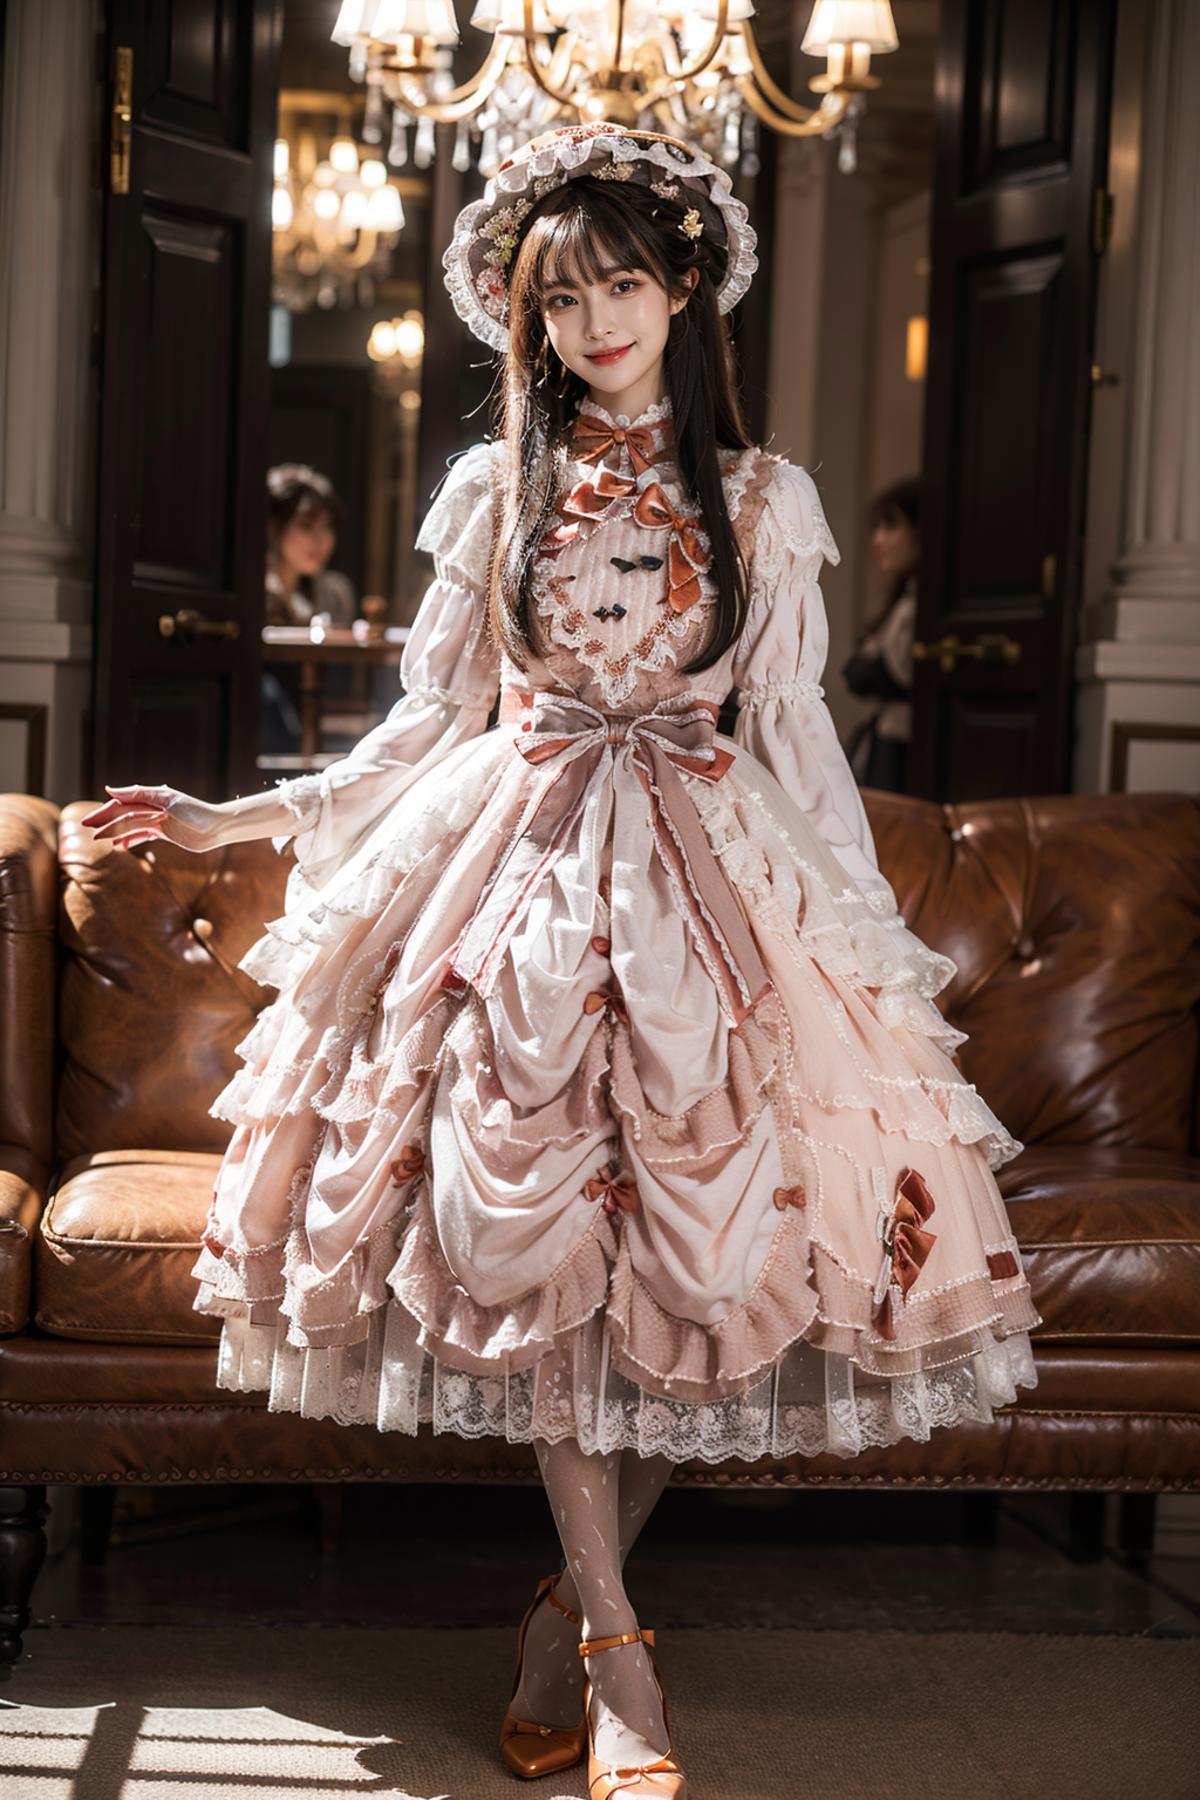 [Realistic] Modern Victorian fashion dress | 洛丽塔裙子 | ロリータ ドレス Vol.1 image by cyberAngel_